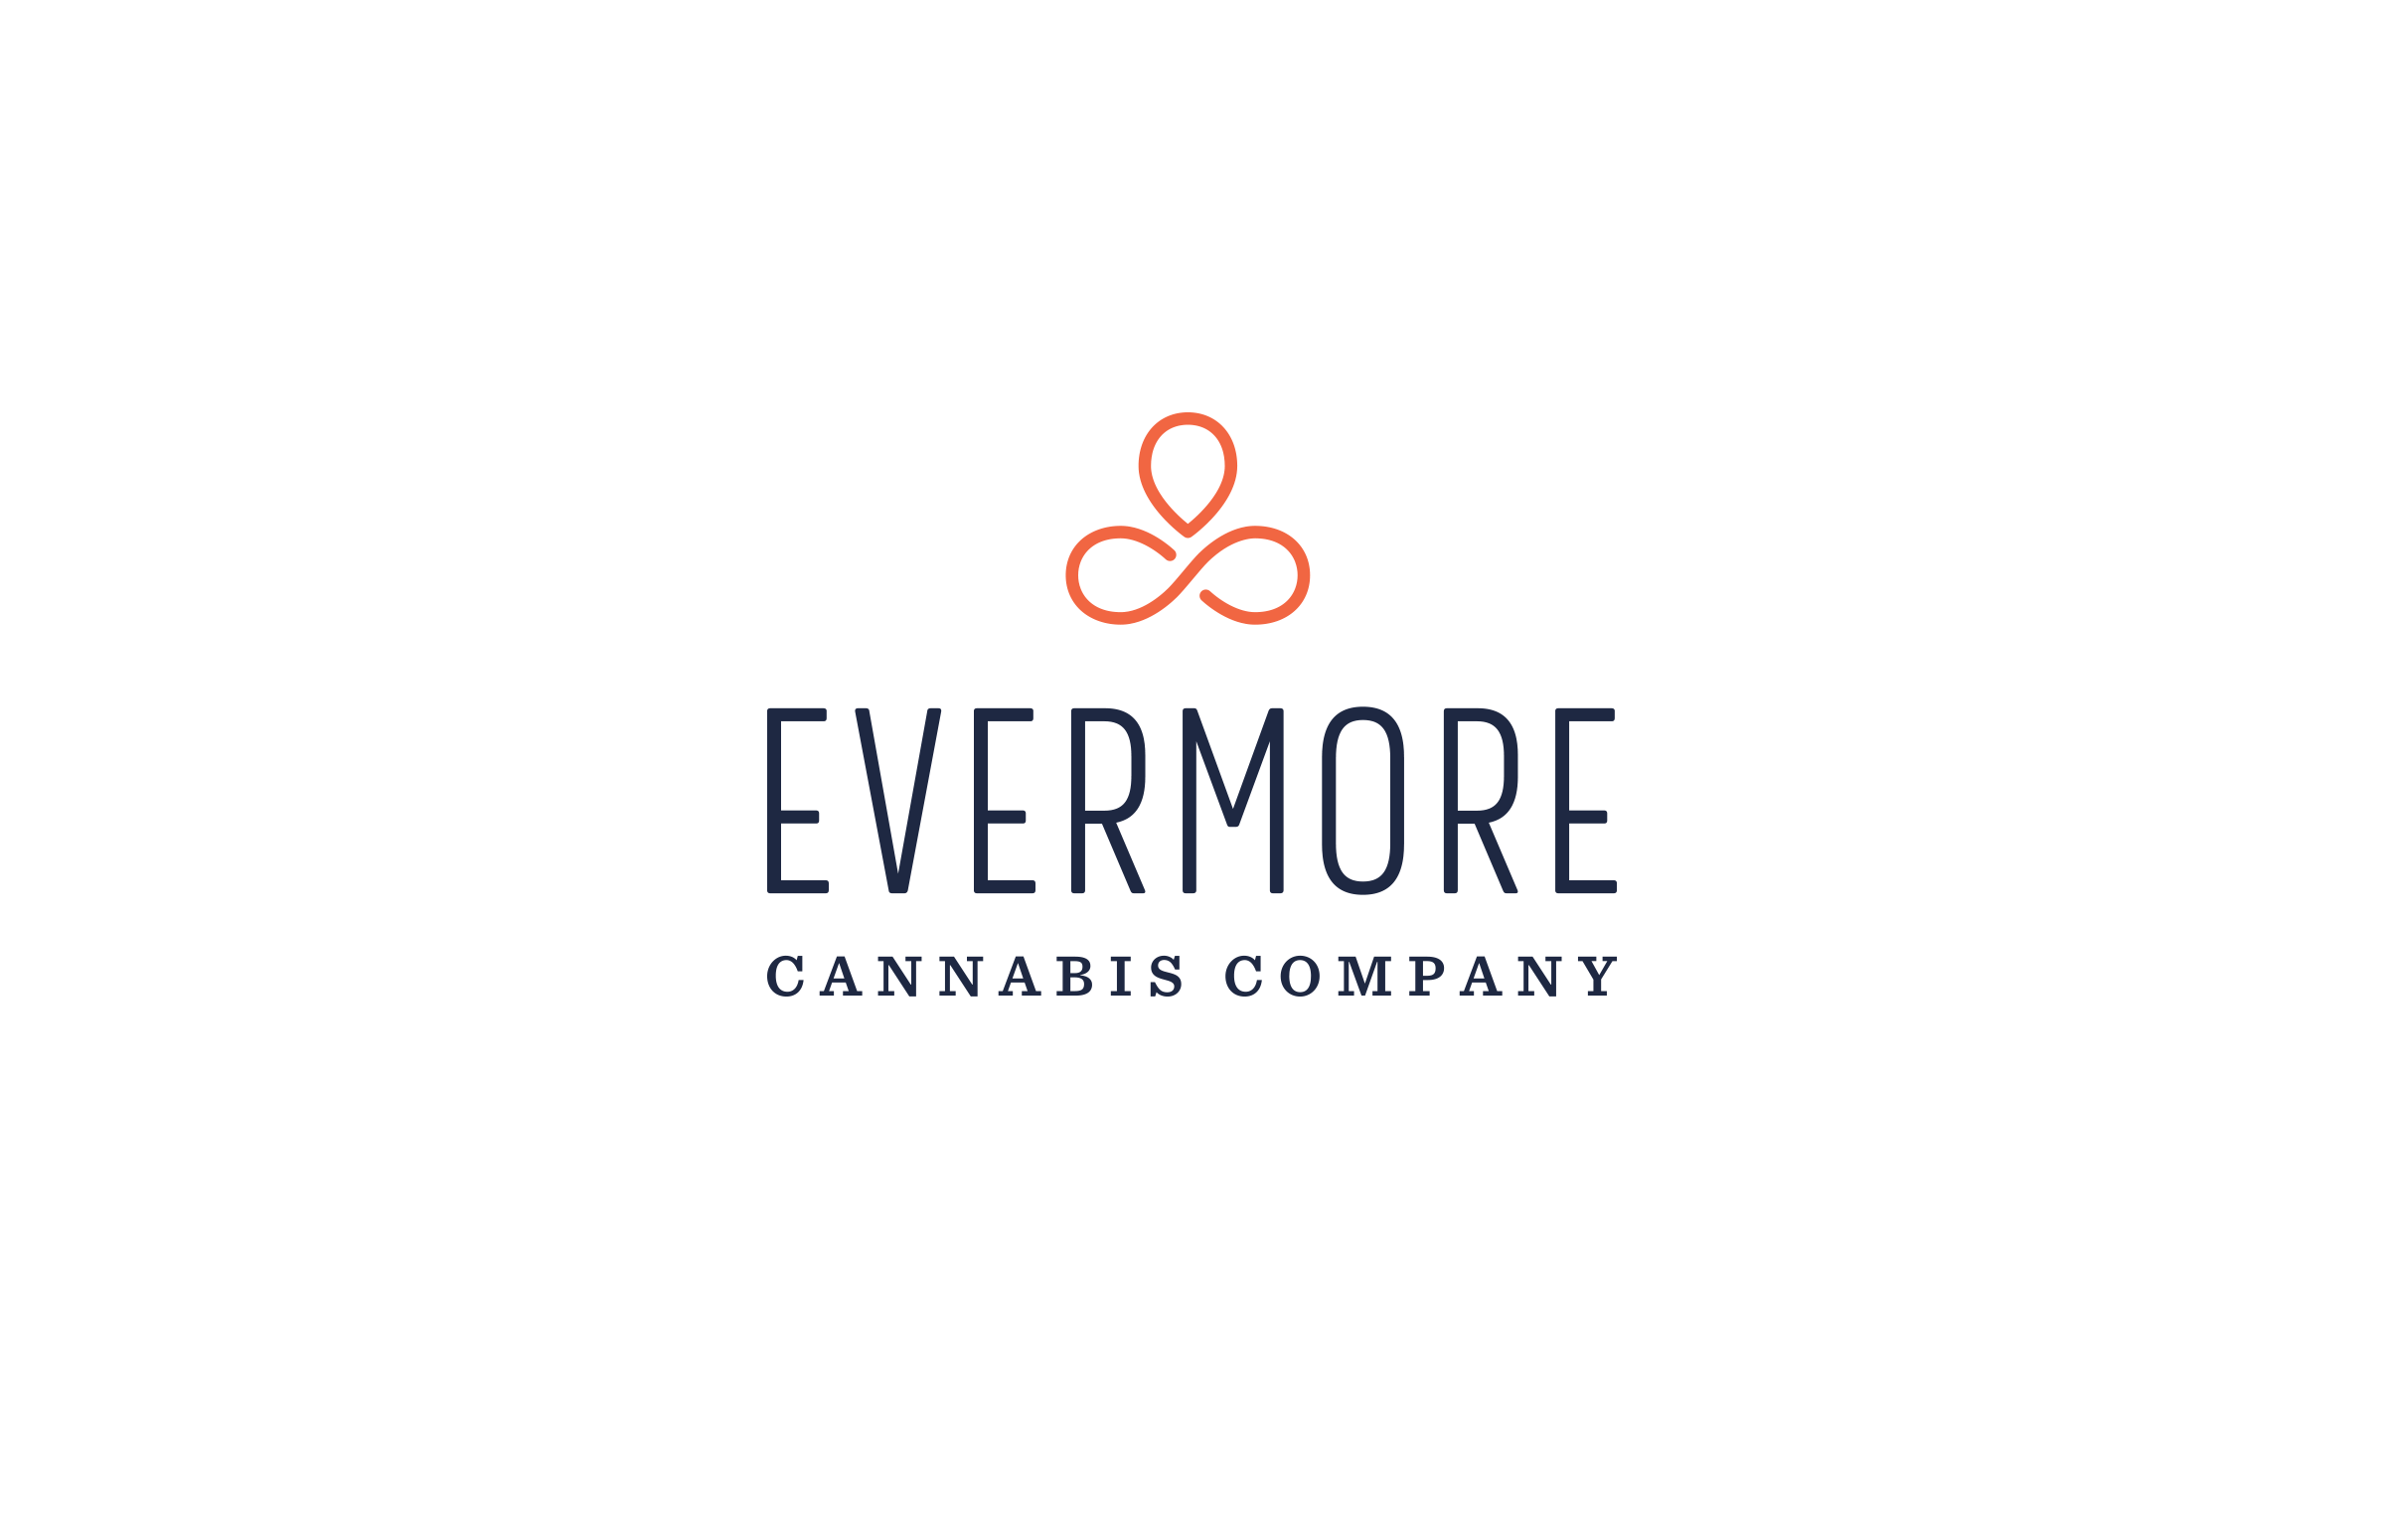 Evermore Cannabis Company: Logo Design